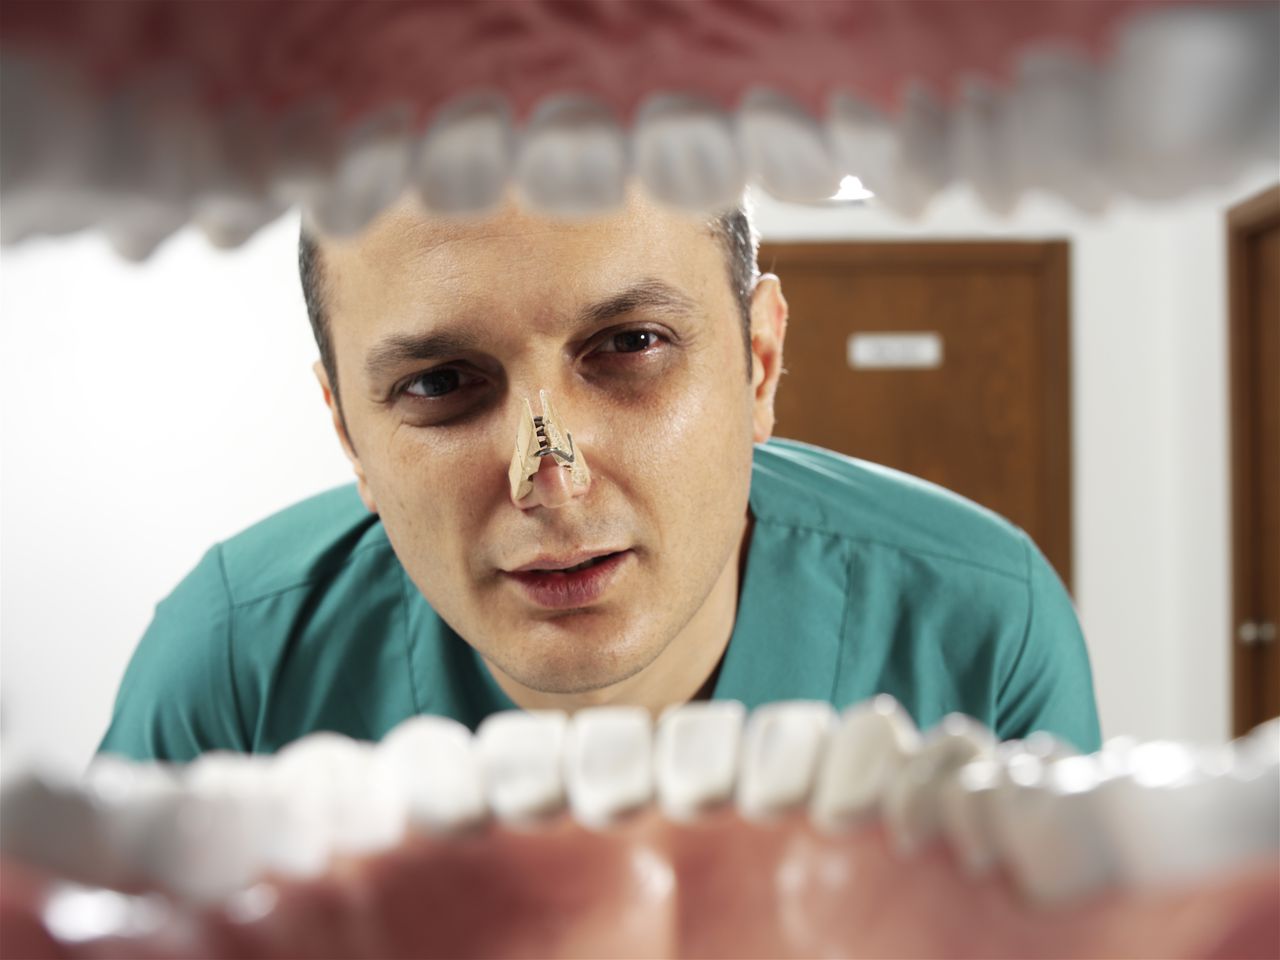 Odontólogo revisa la boca de un hombre